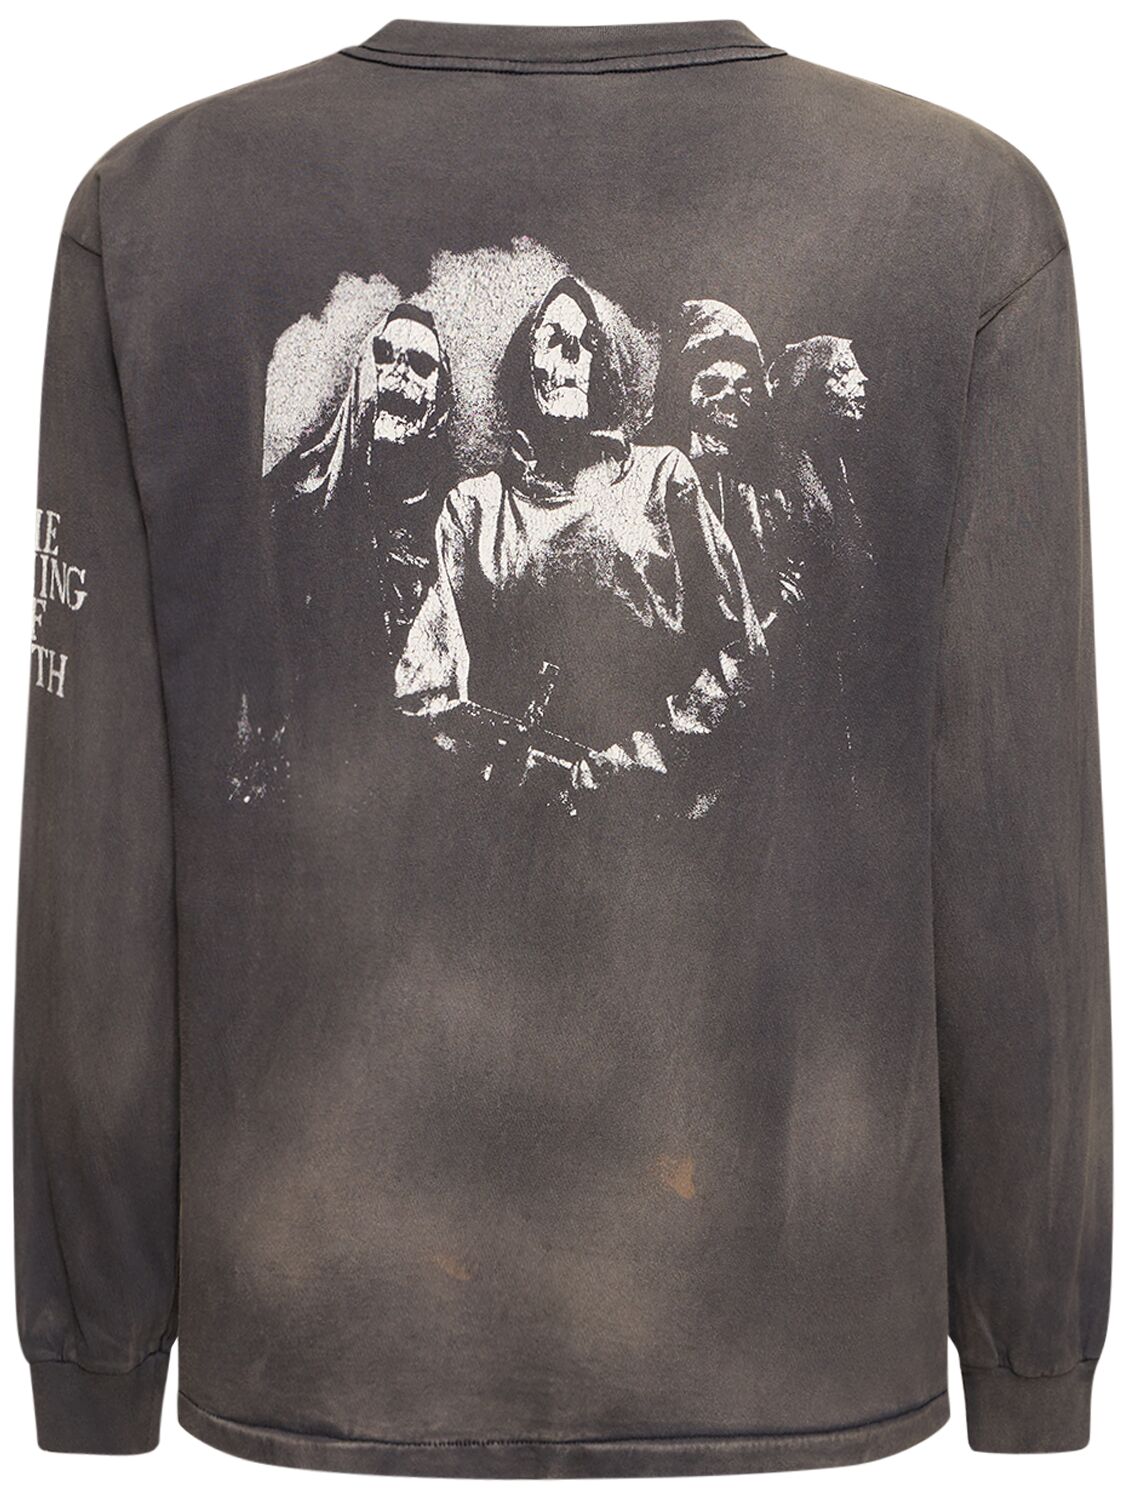 Shop Saint Michael Burn Of Earth Long Sleeve T-shirt In Schwarz,weiss